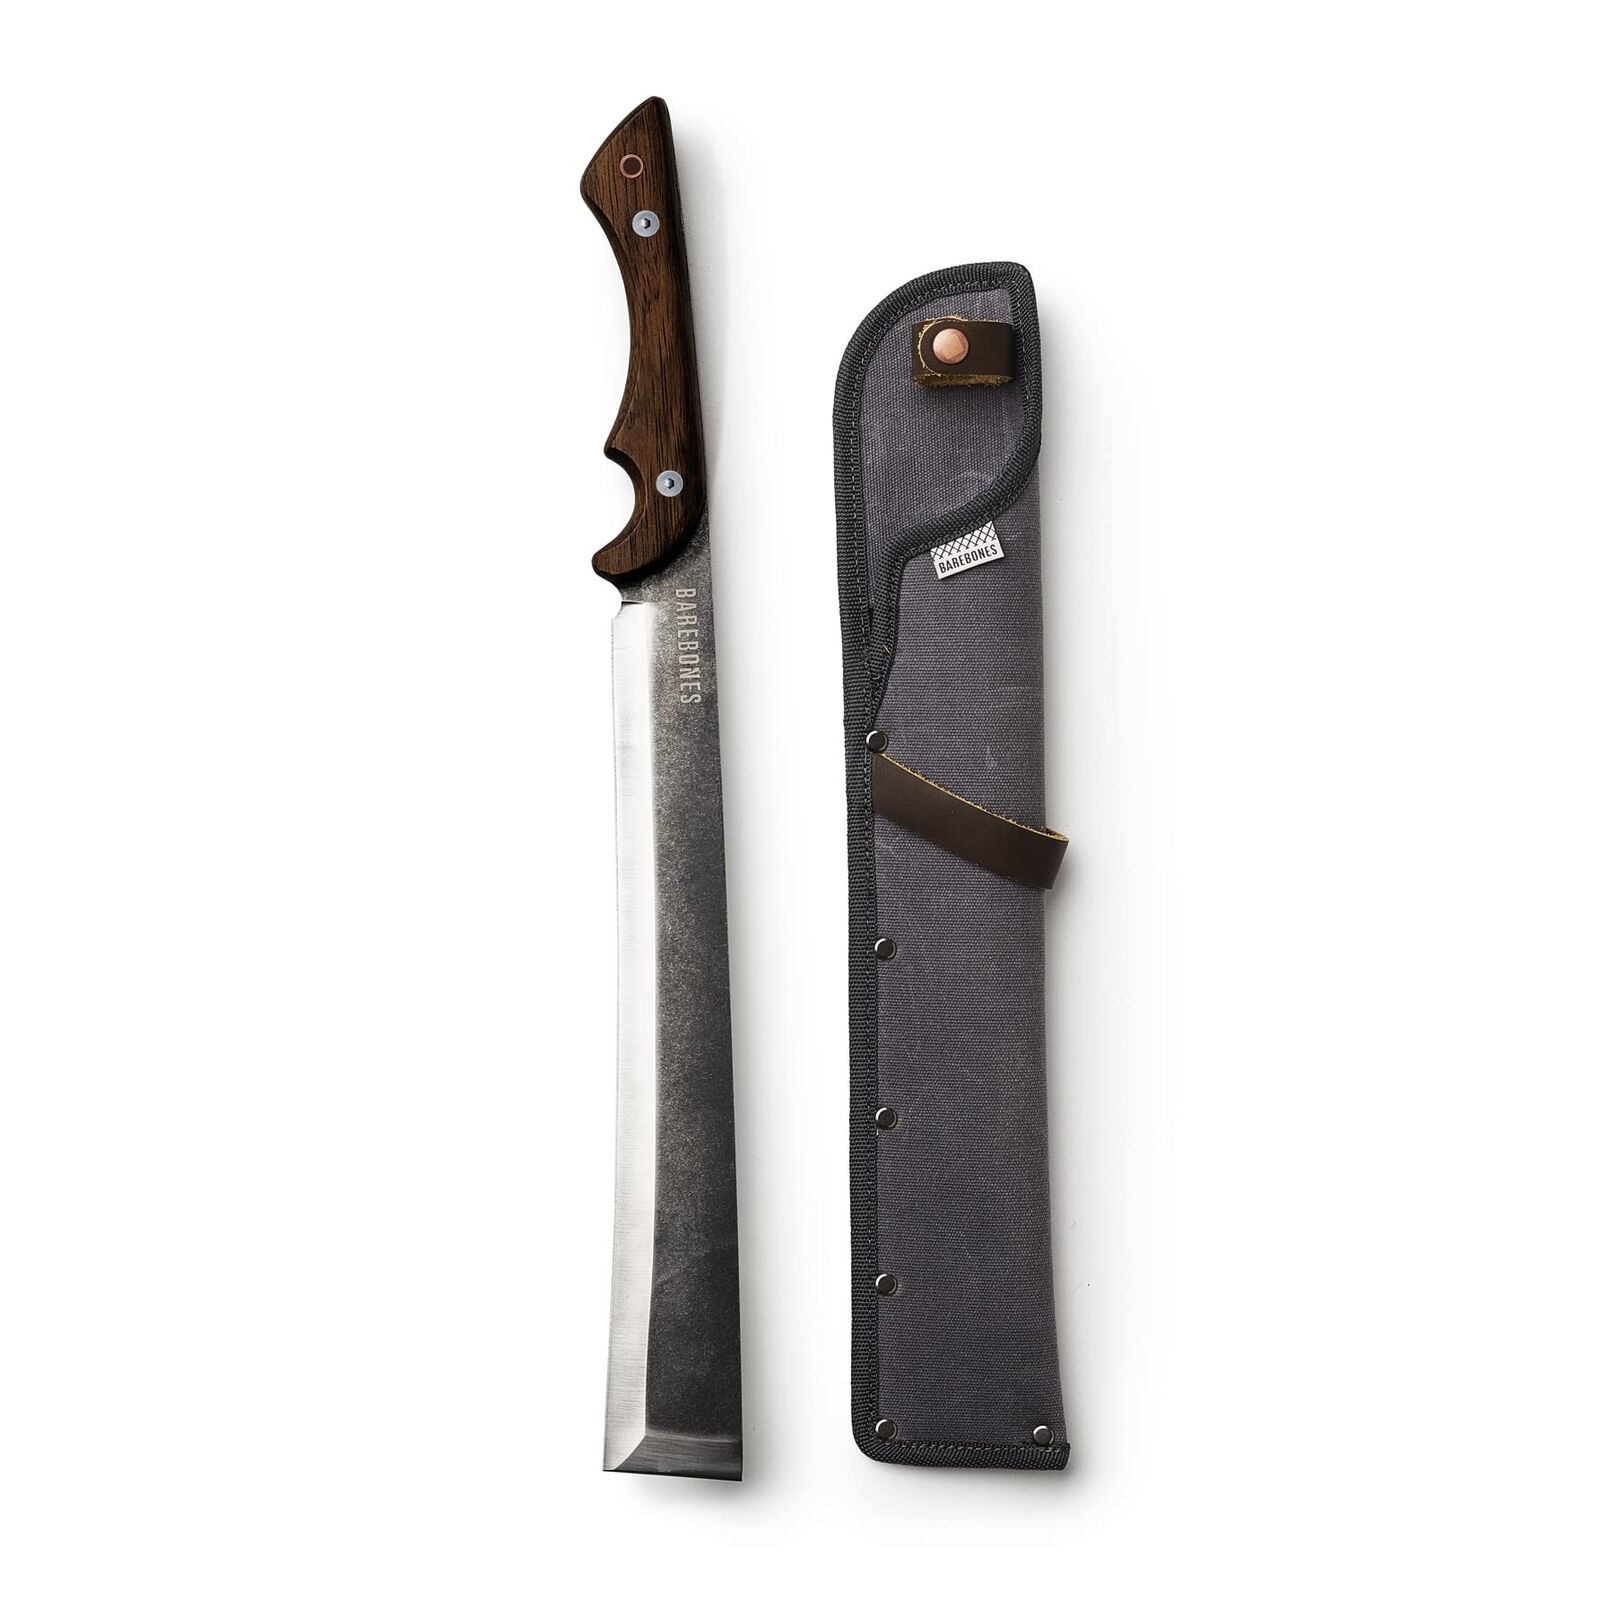 Barebones Japanese NATA Tool - Machete Perfect for Chopping, Splitting & Cutting